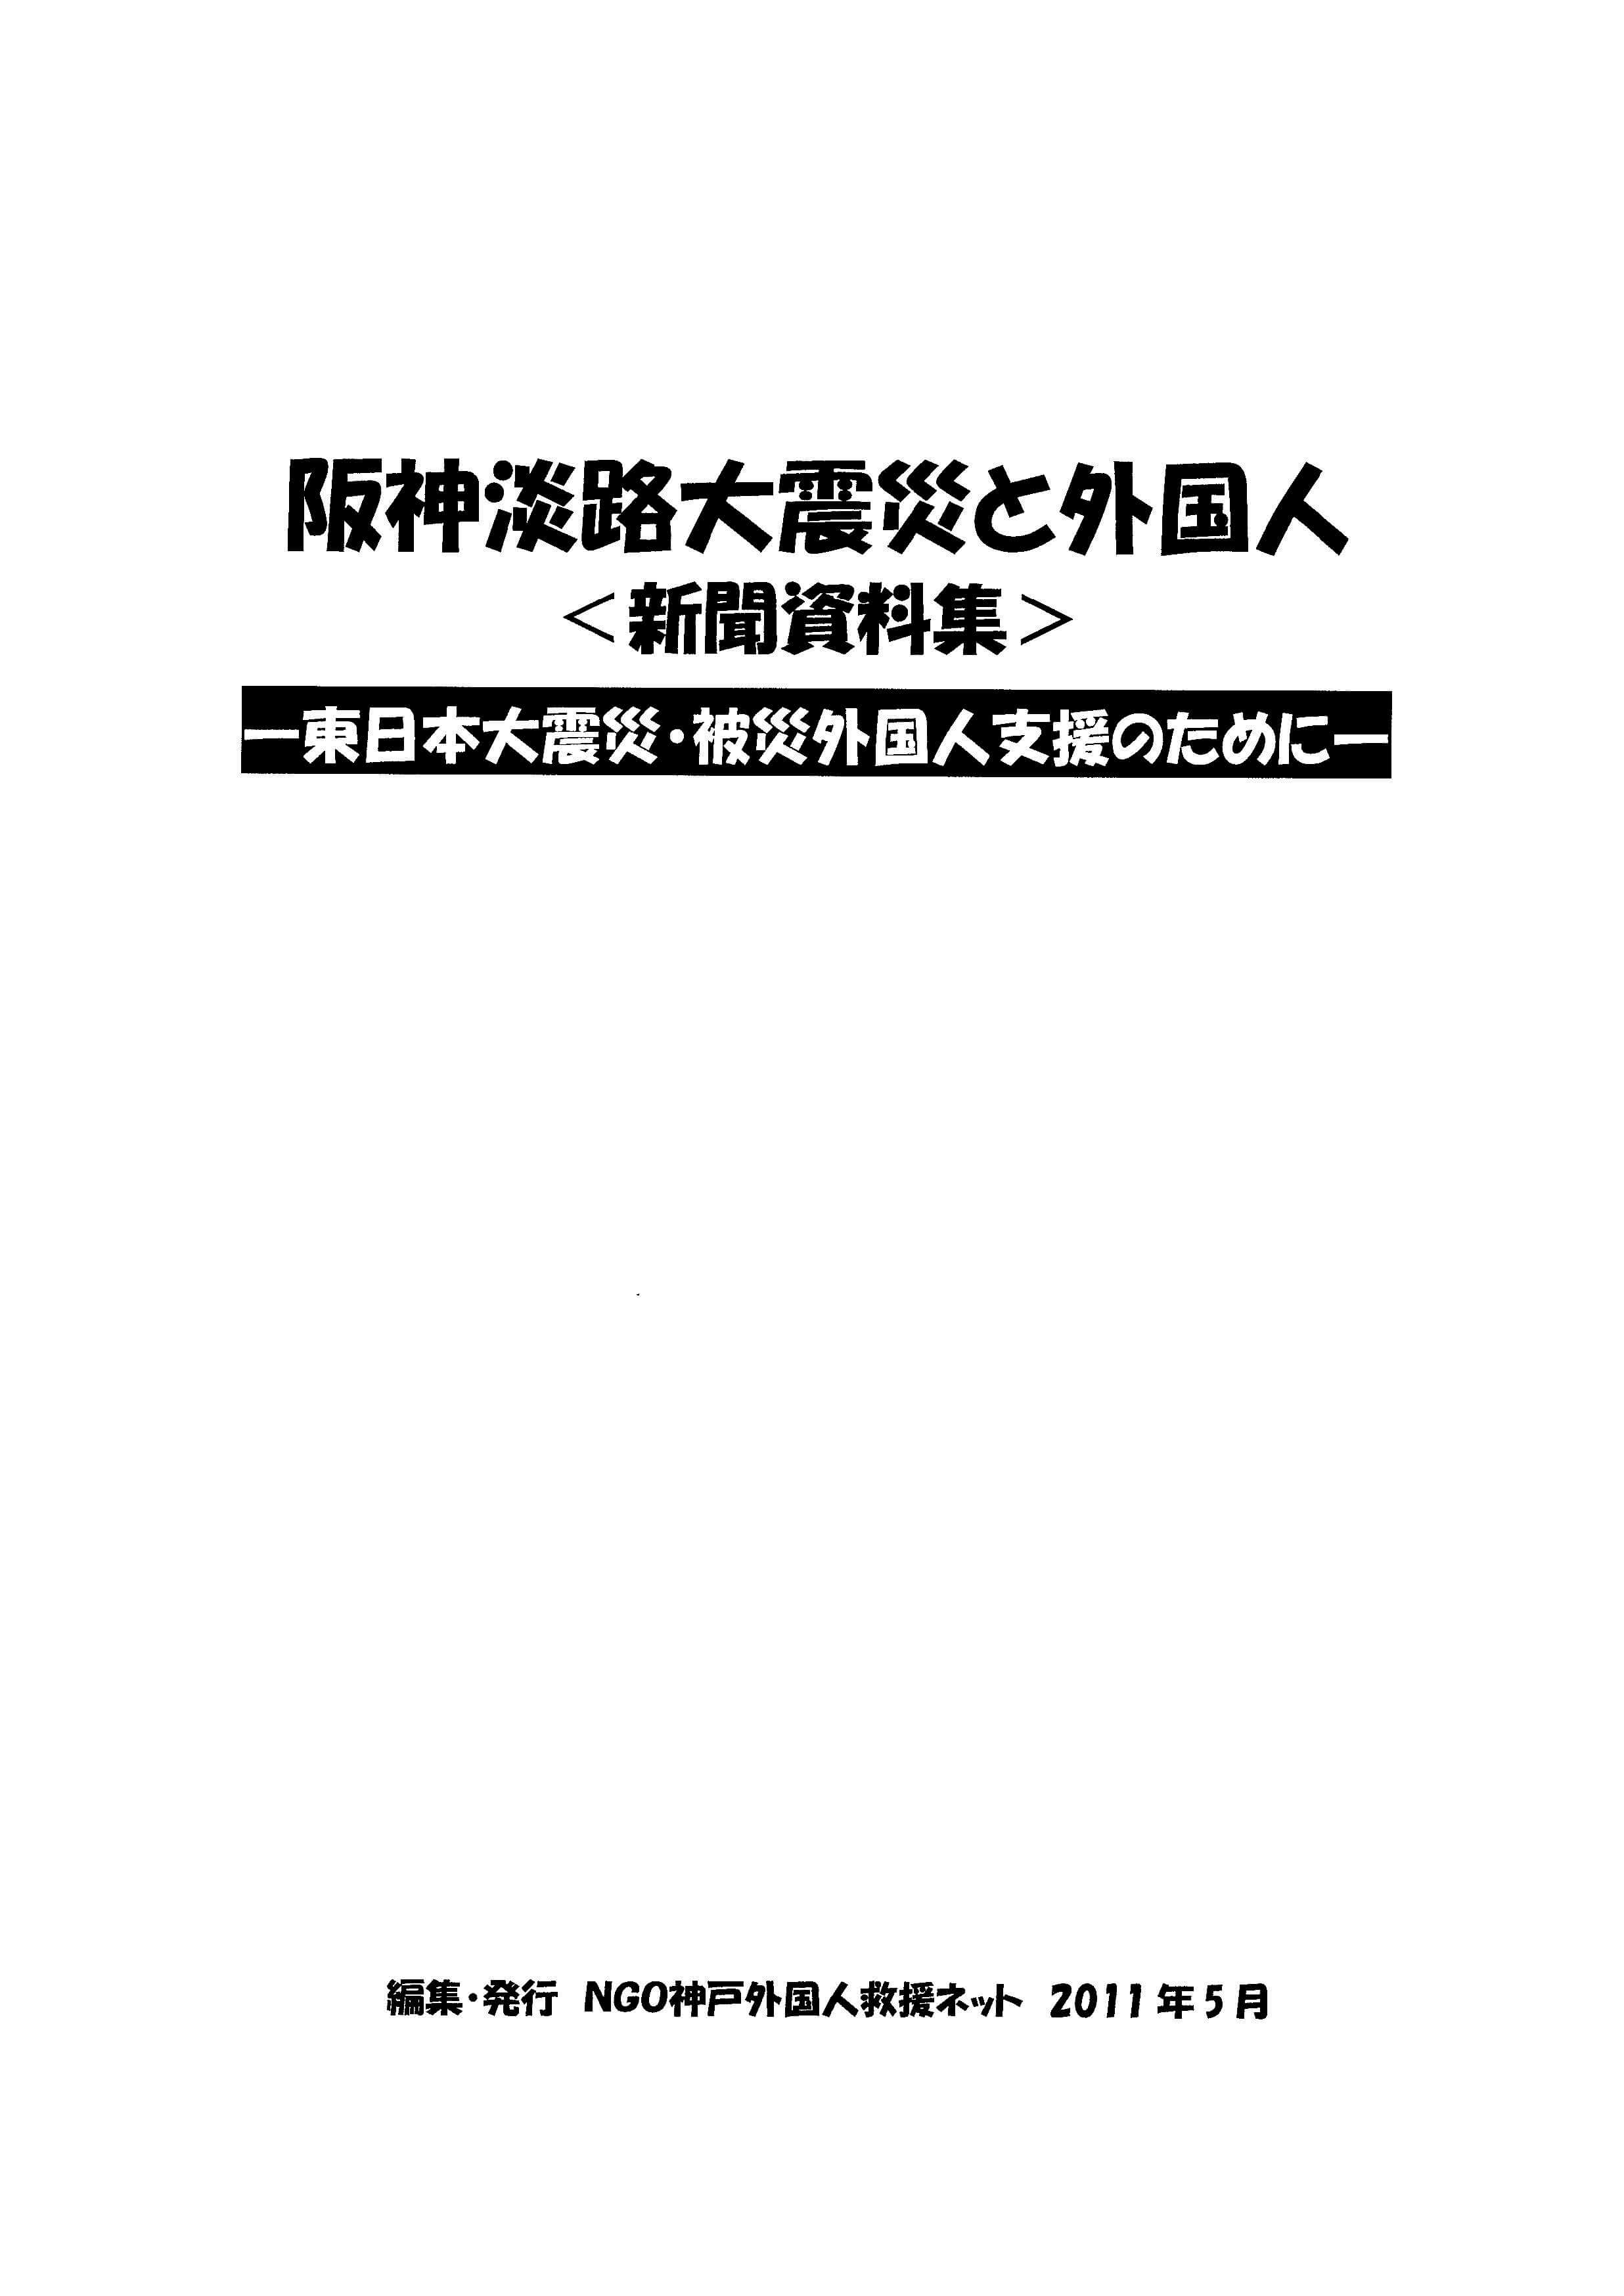 阪神淡路大震災と外国人（新聞資料集） 東日本大震災・被災外国人支援のために